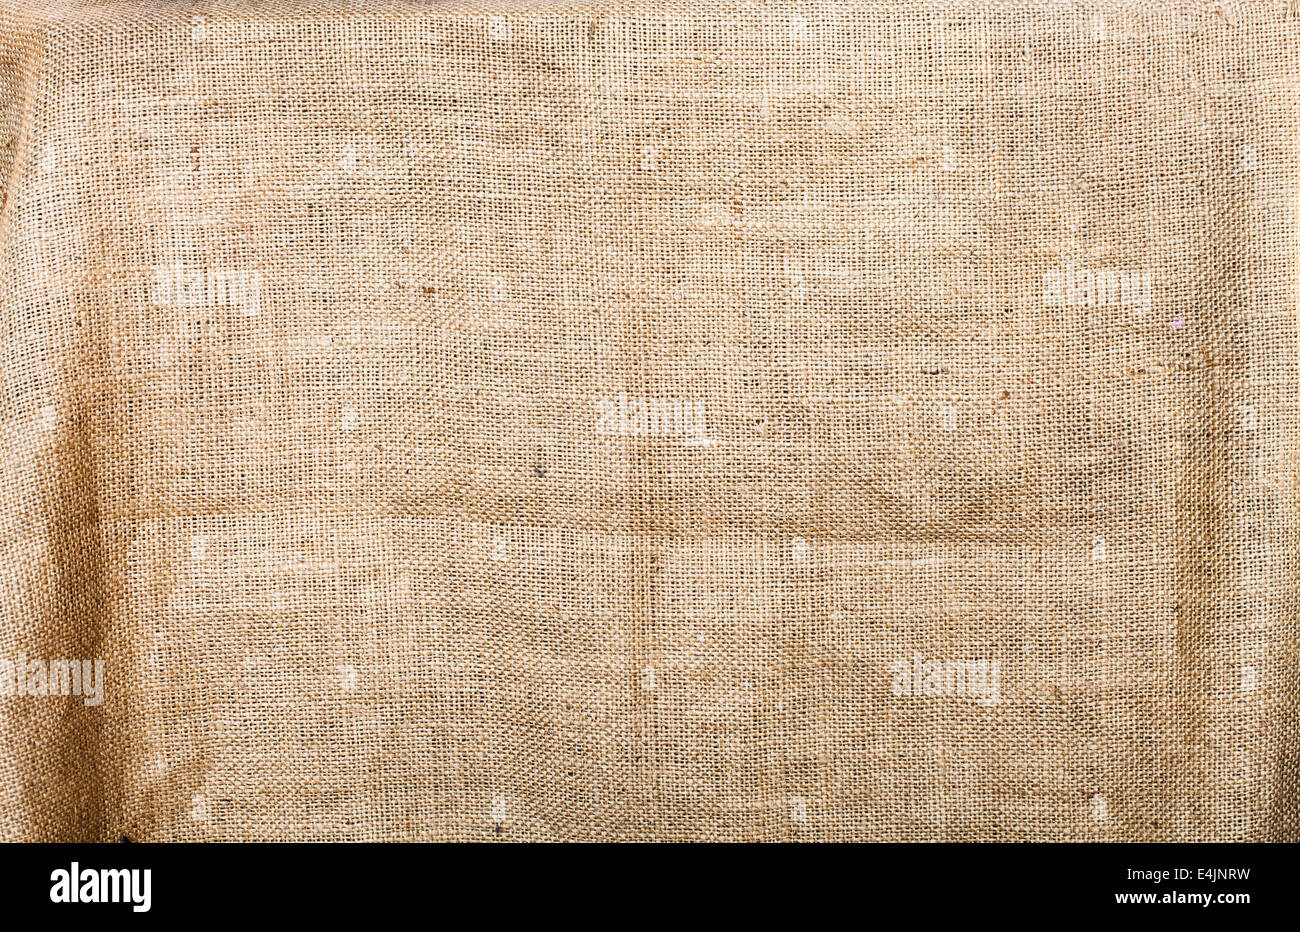 Texture of old burlap fabric Stock Photo